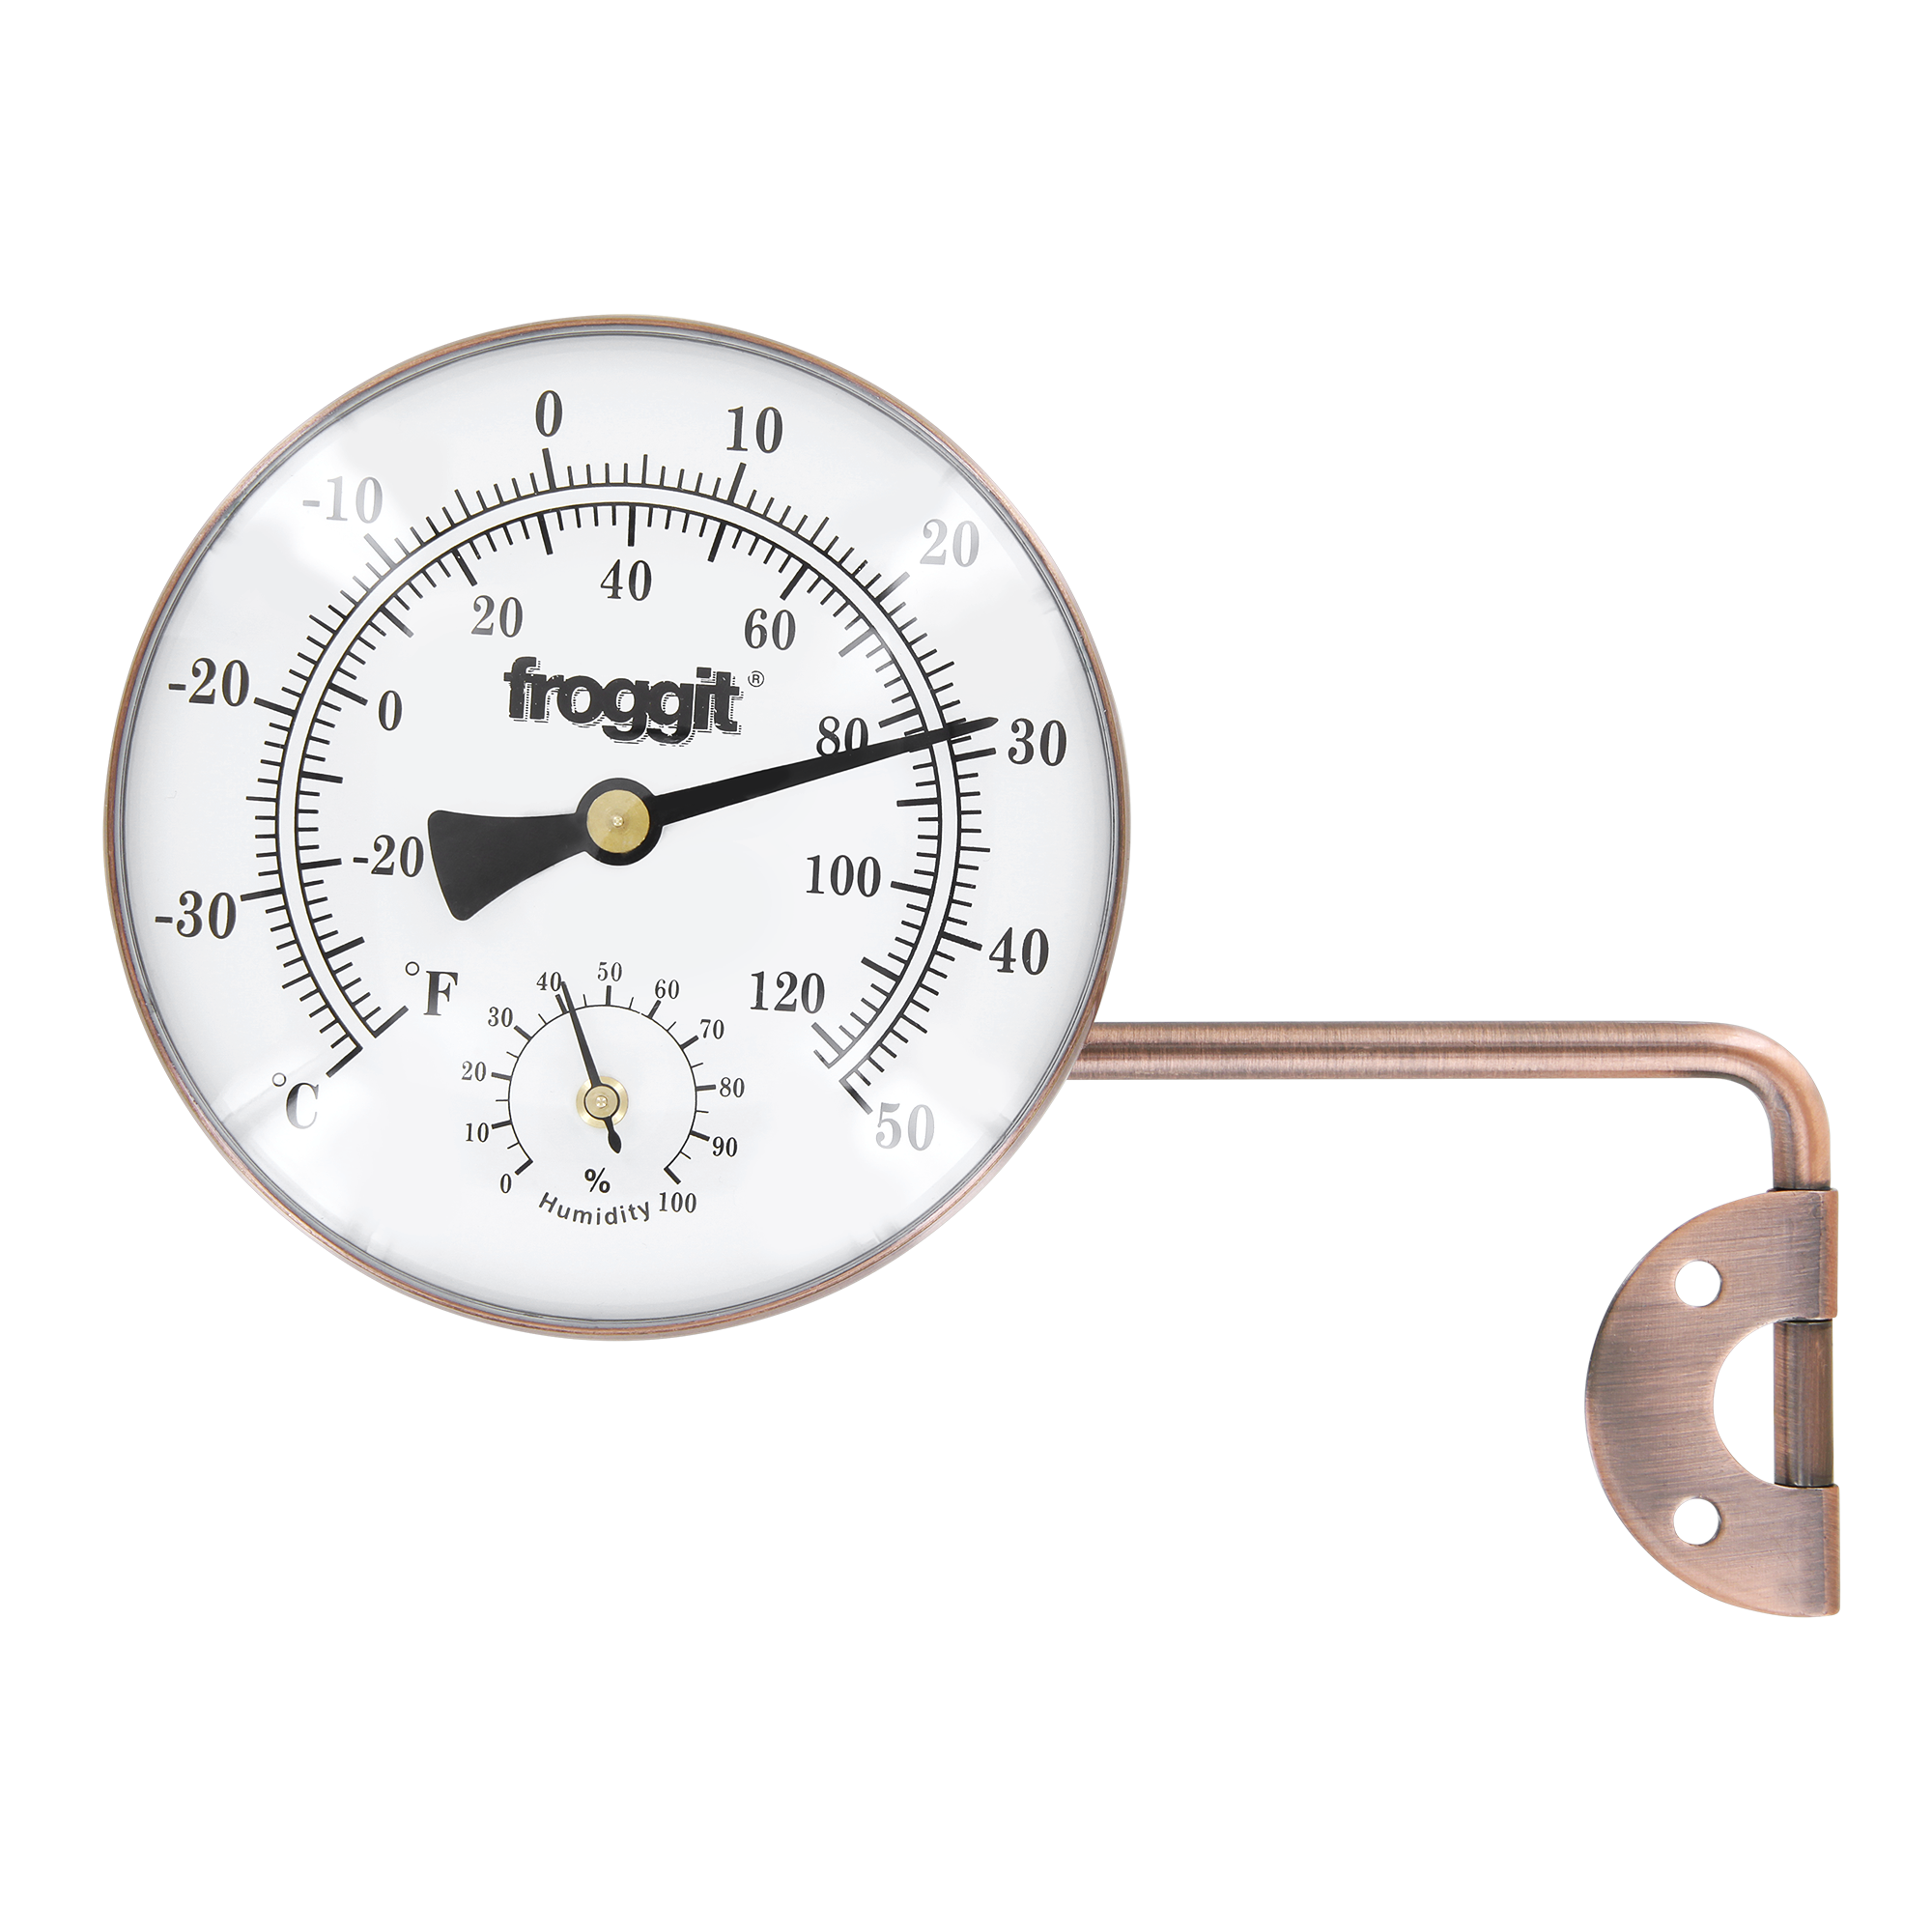 Froggit Wetterstationen Shop - Froggit Retro Metall Thermo